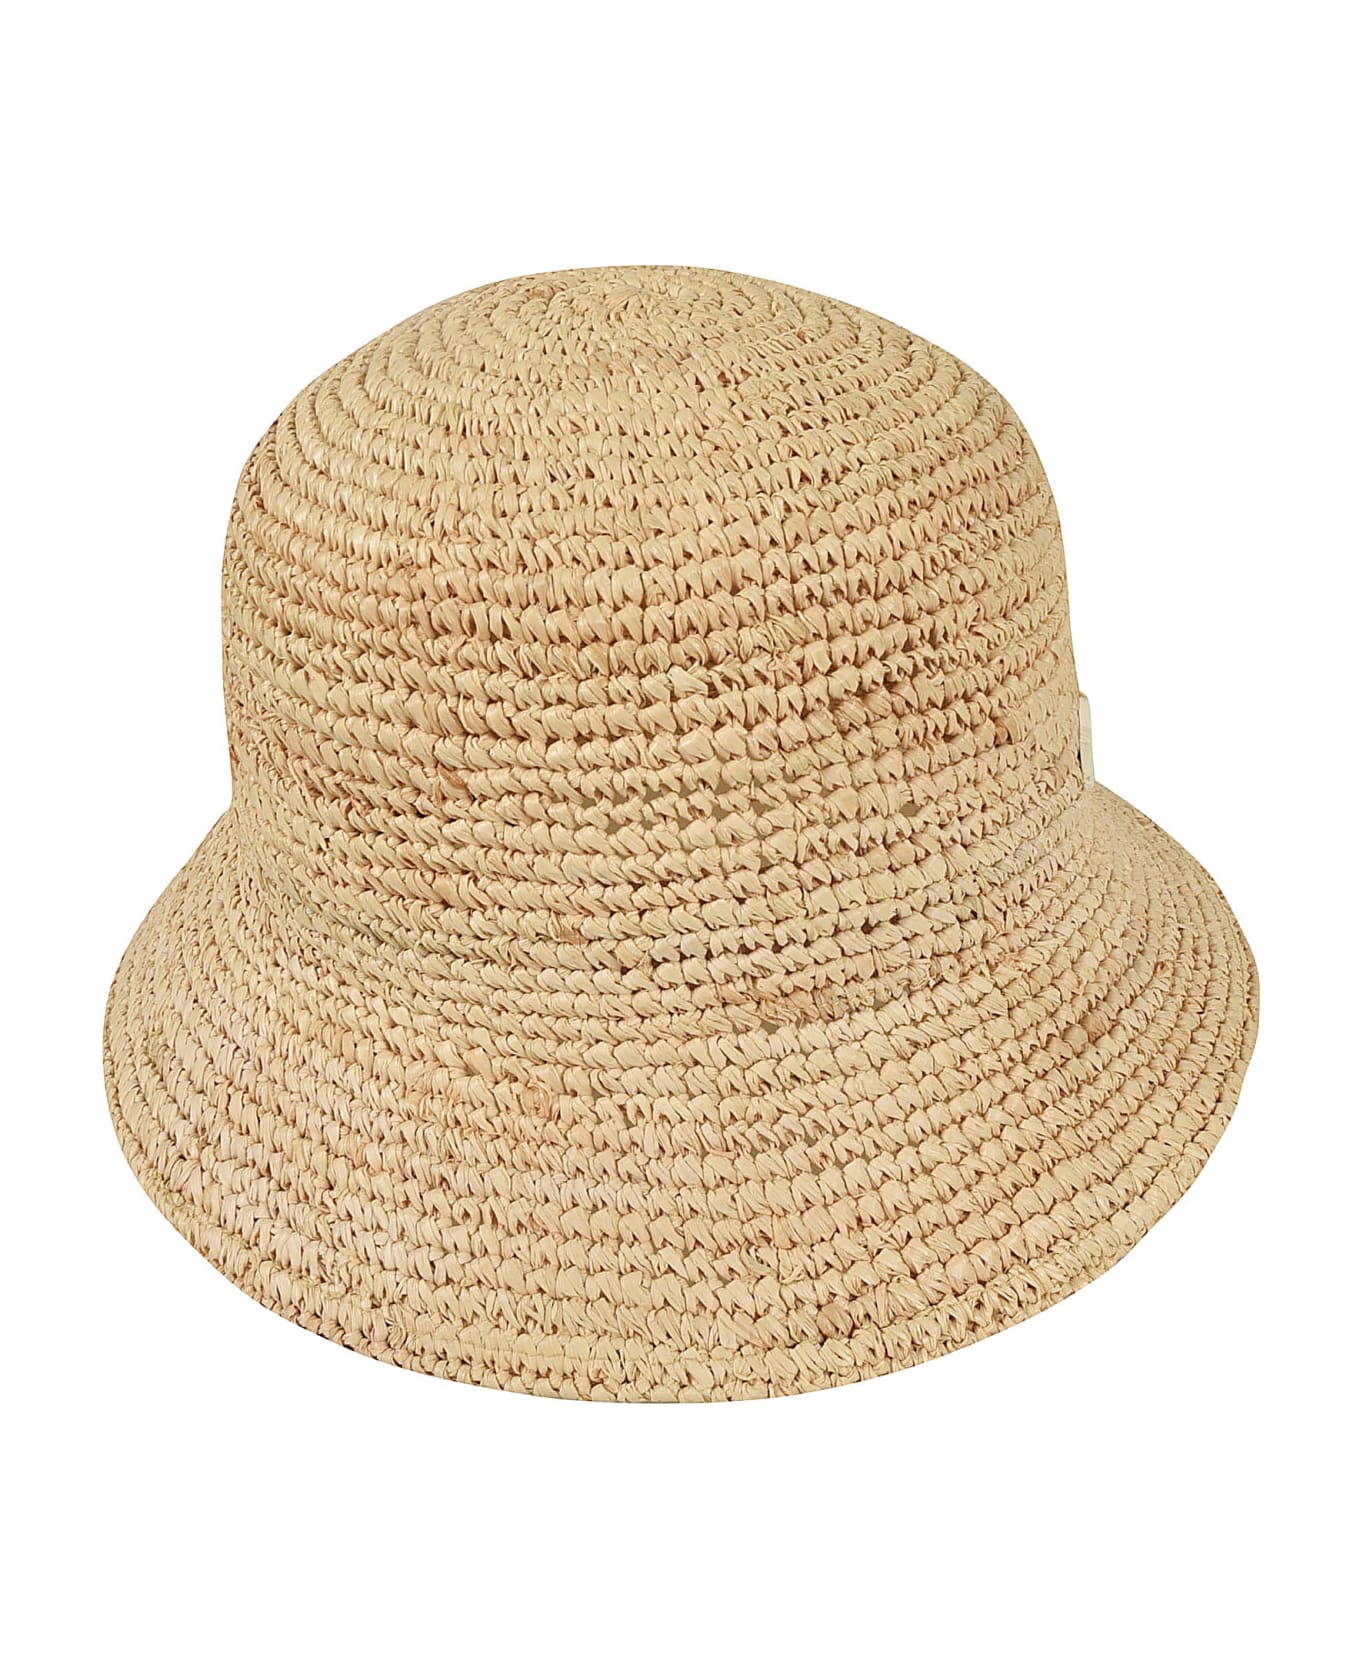 Borsalino Rafia Crochet Bucket Hat - 7140